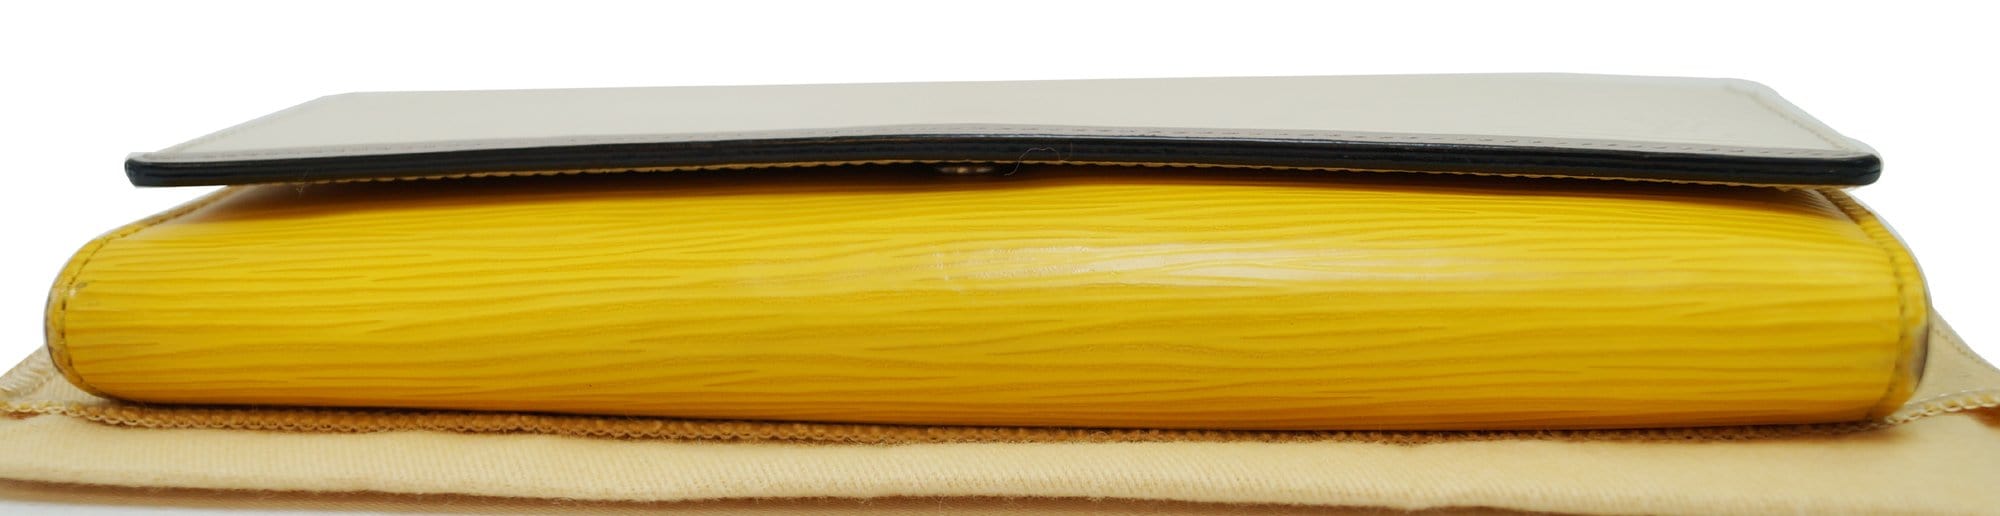 Louis Vuitton Portefeuille Viennois M63249 Yellow Wallet 11502